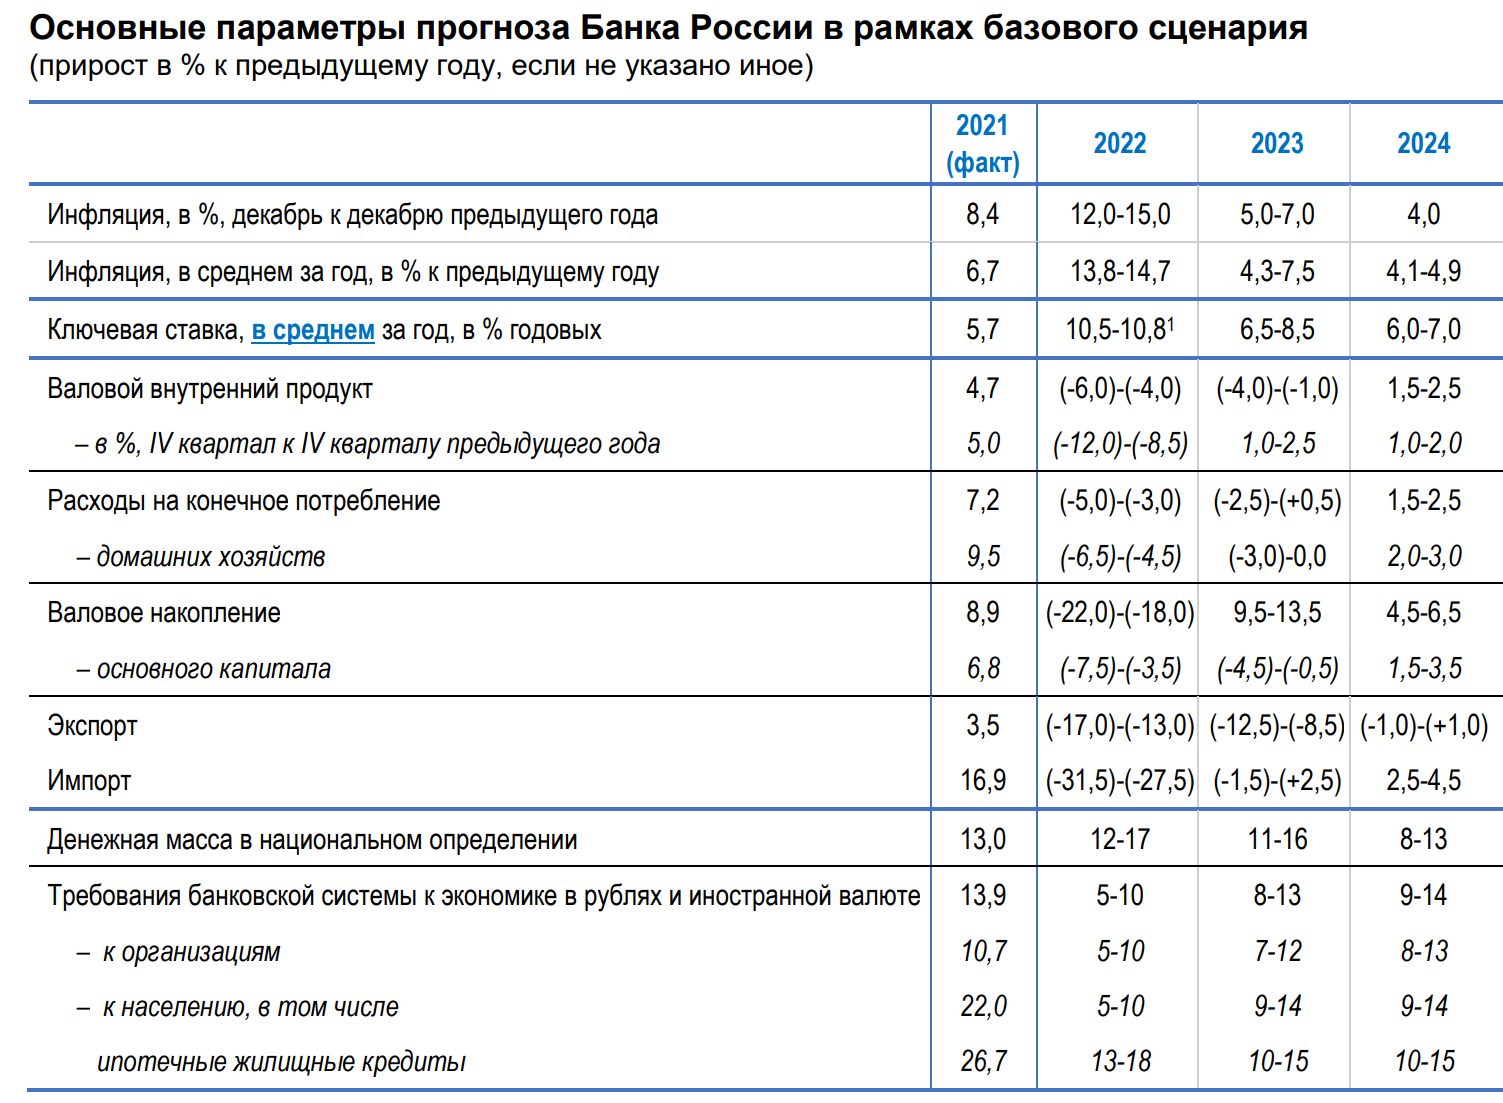 Ключевая ставка банка России 2022. Ключевая ставка ЦБ В 2022 году. Динамика ключевой ставки в 2022 году. Ключевая ставка ЦБ РФ таблица 2022.